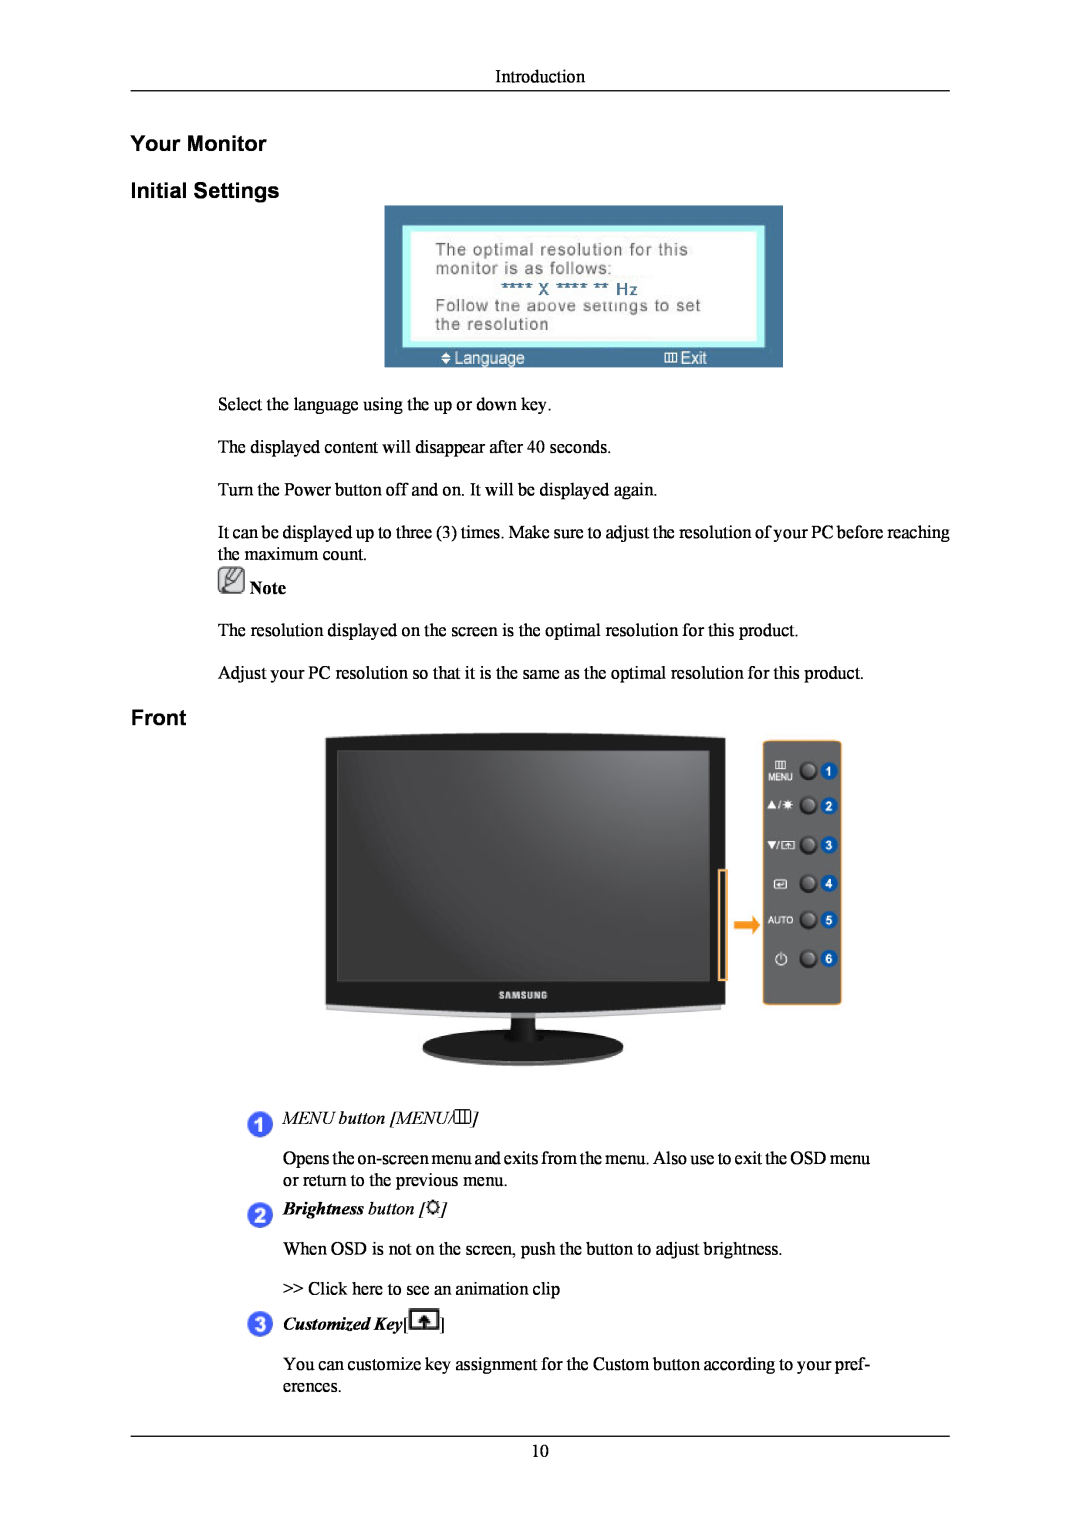 Samsung 2433BW user manual Your Monitor Initial Settings, Front, MENU button MENU, Brightness button, Customized Key 